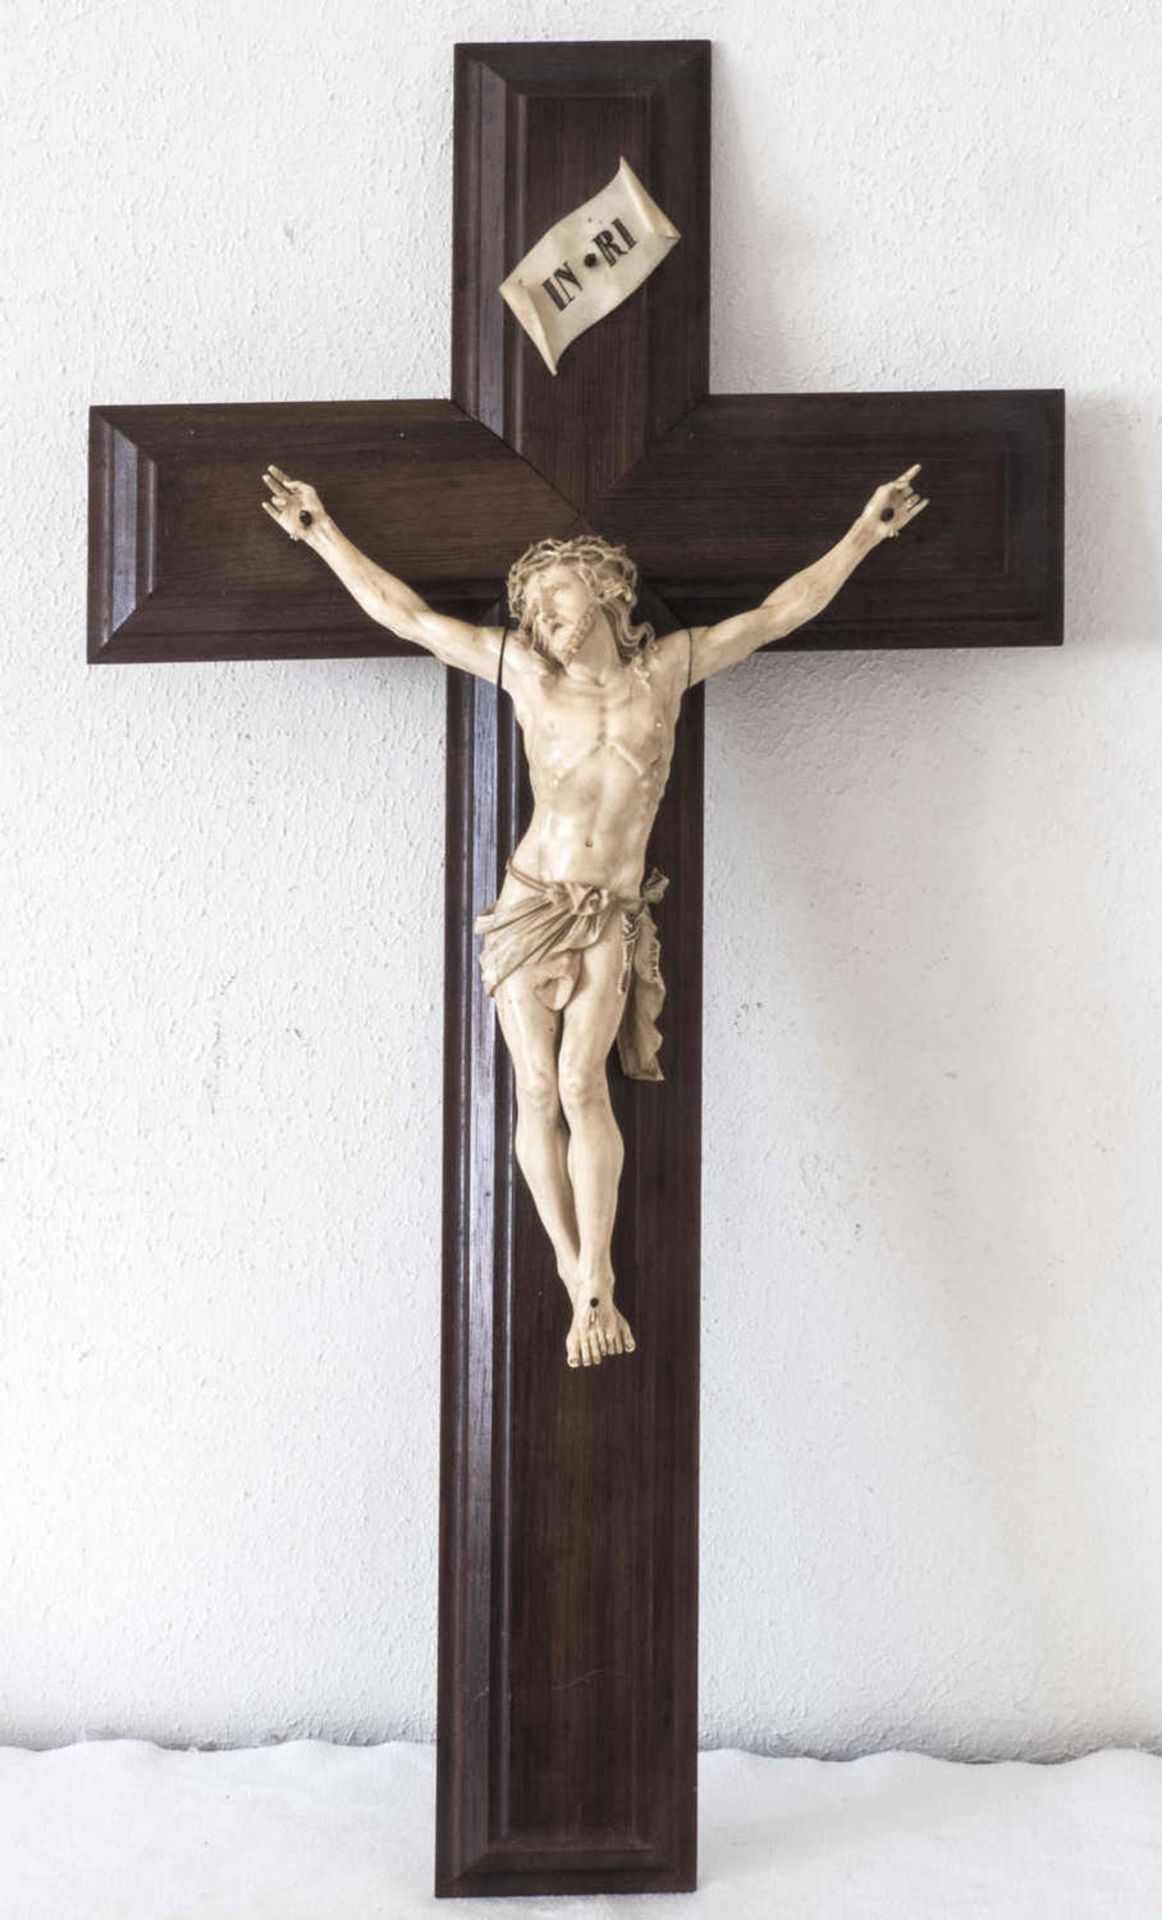 Holzkreuz, INRI, Jesuskörper Elfenbein, mit Signatur"Dean", Höhe: ca. 56 cm. Fußnagel fehlt.